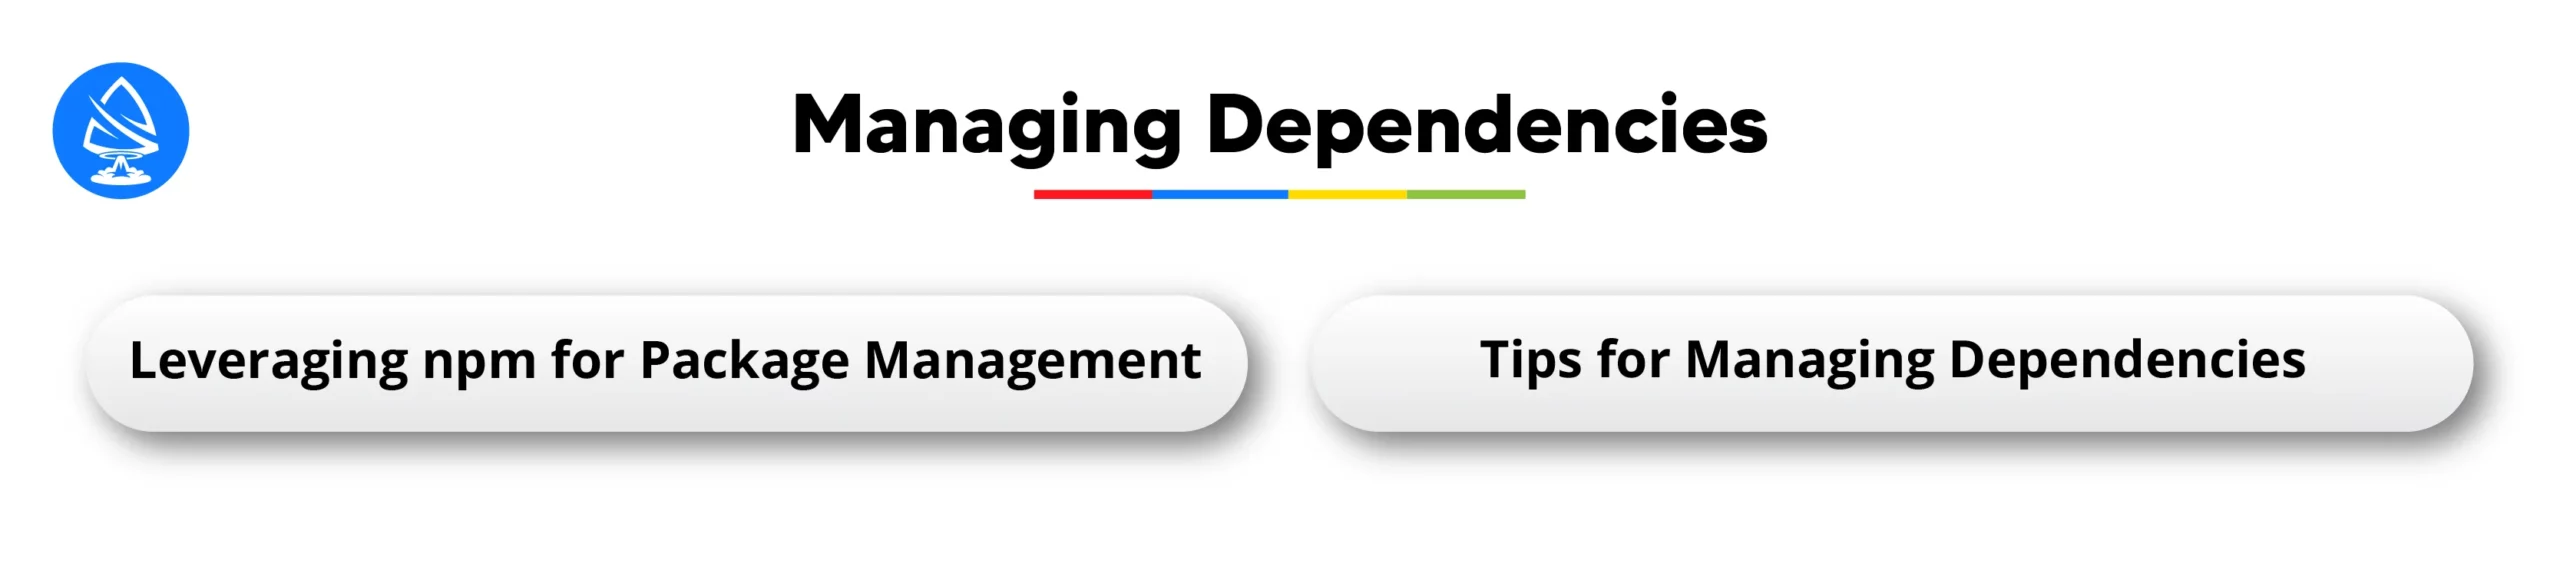 Managing Dependencies 